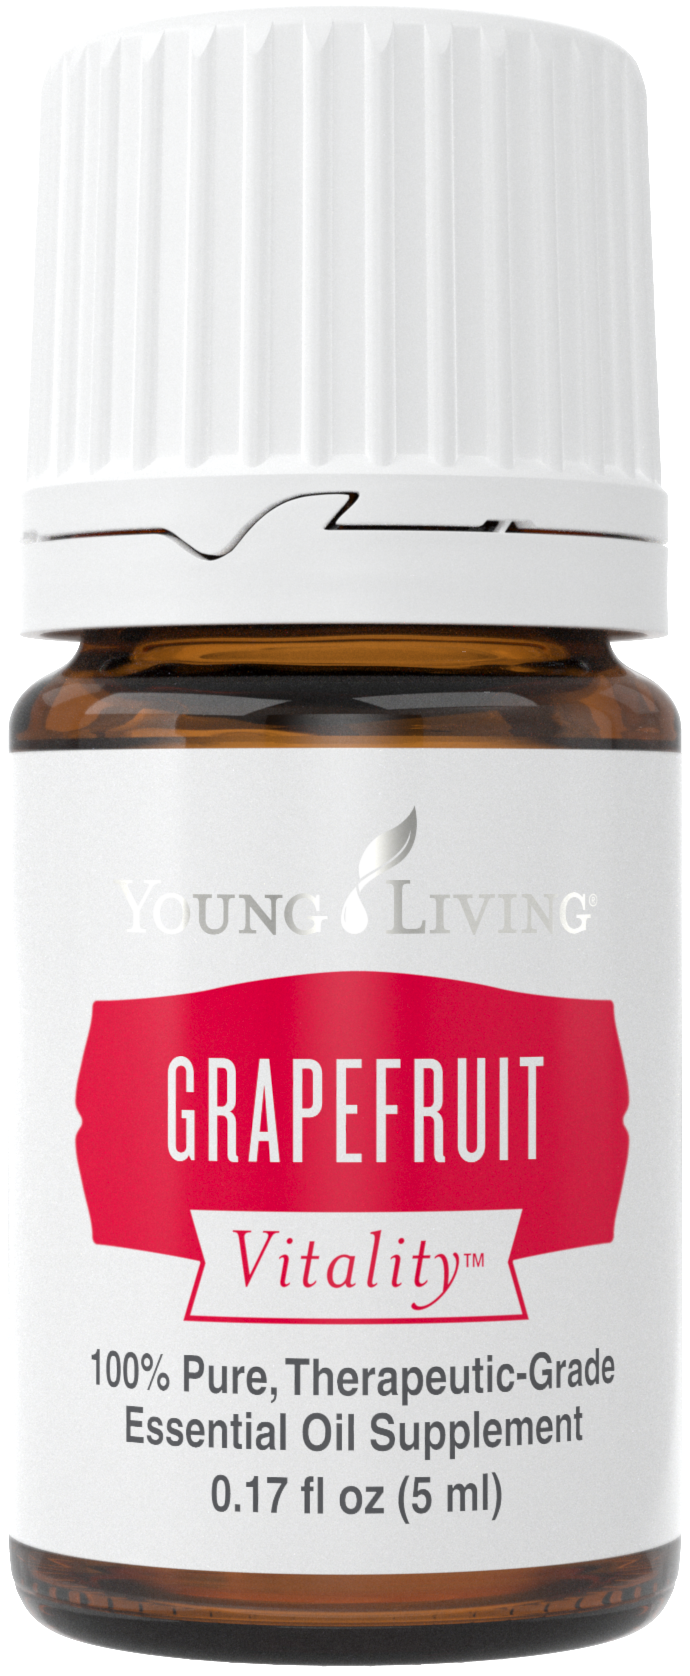 Grapefruit Vitality essential oil